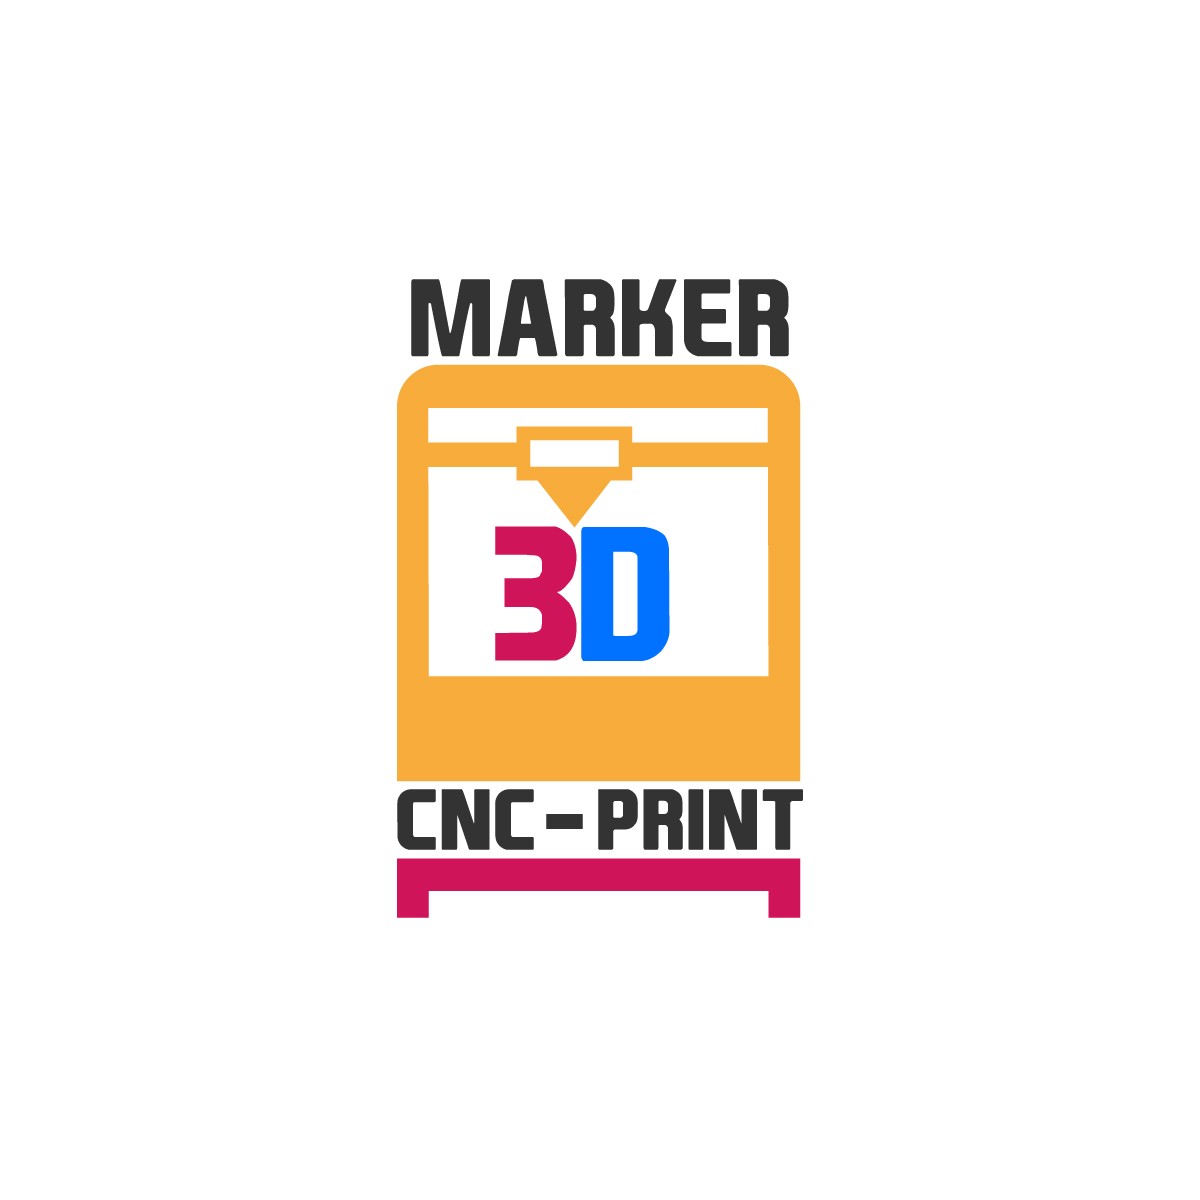 The Marker 3D CNC & Print